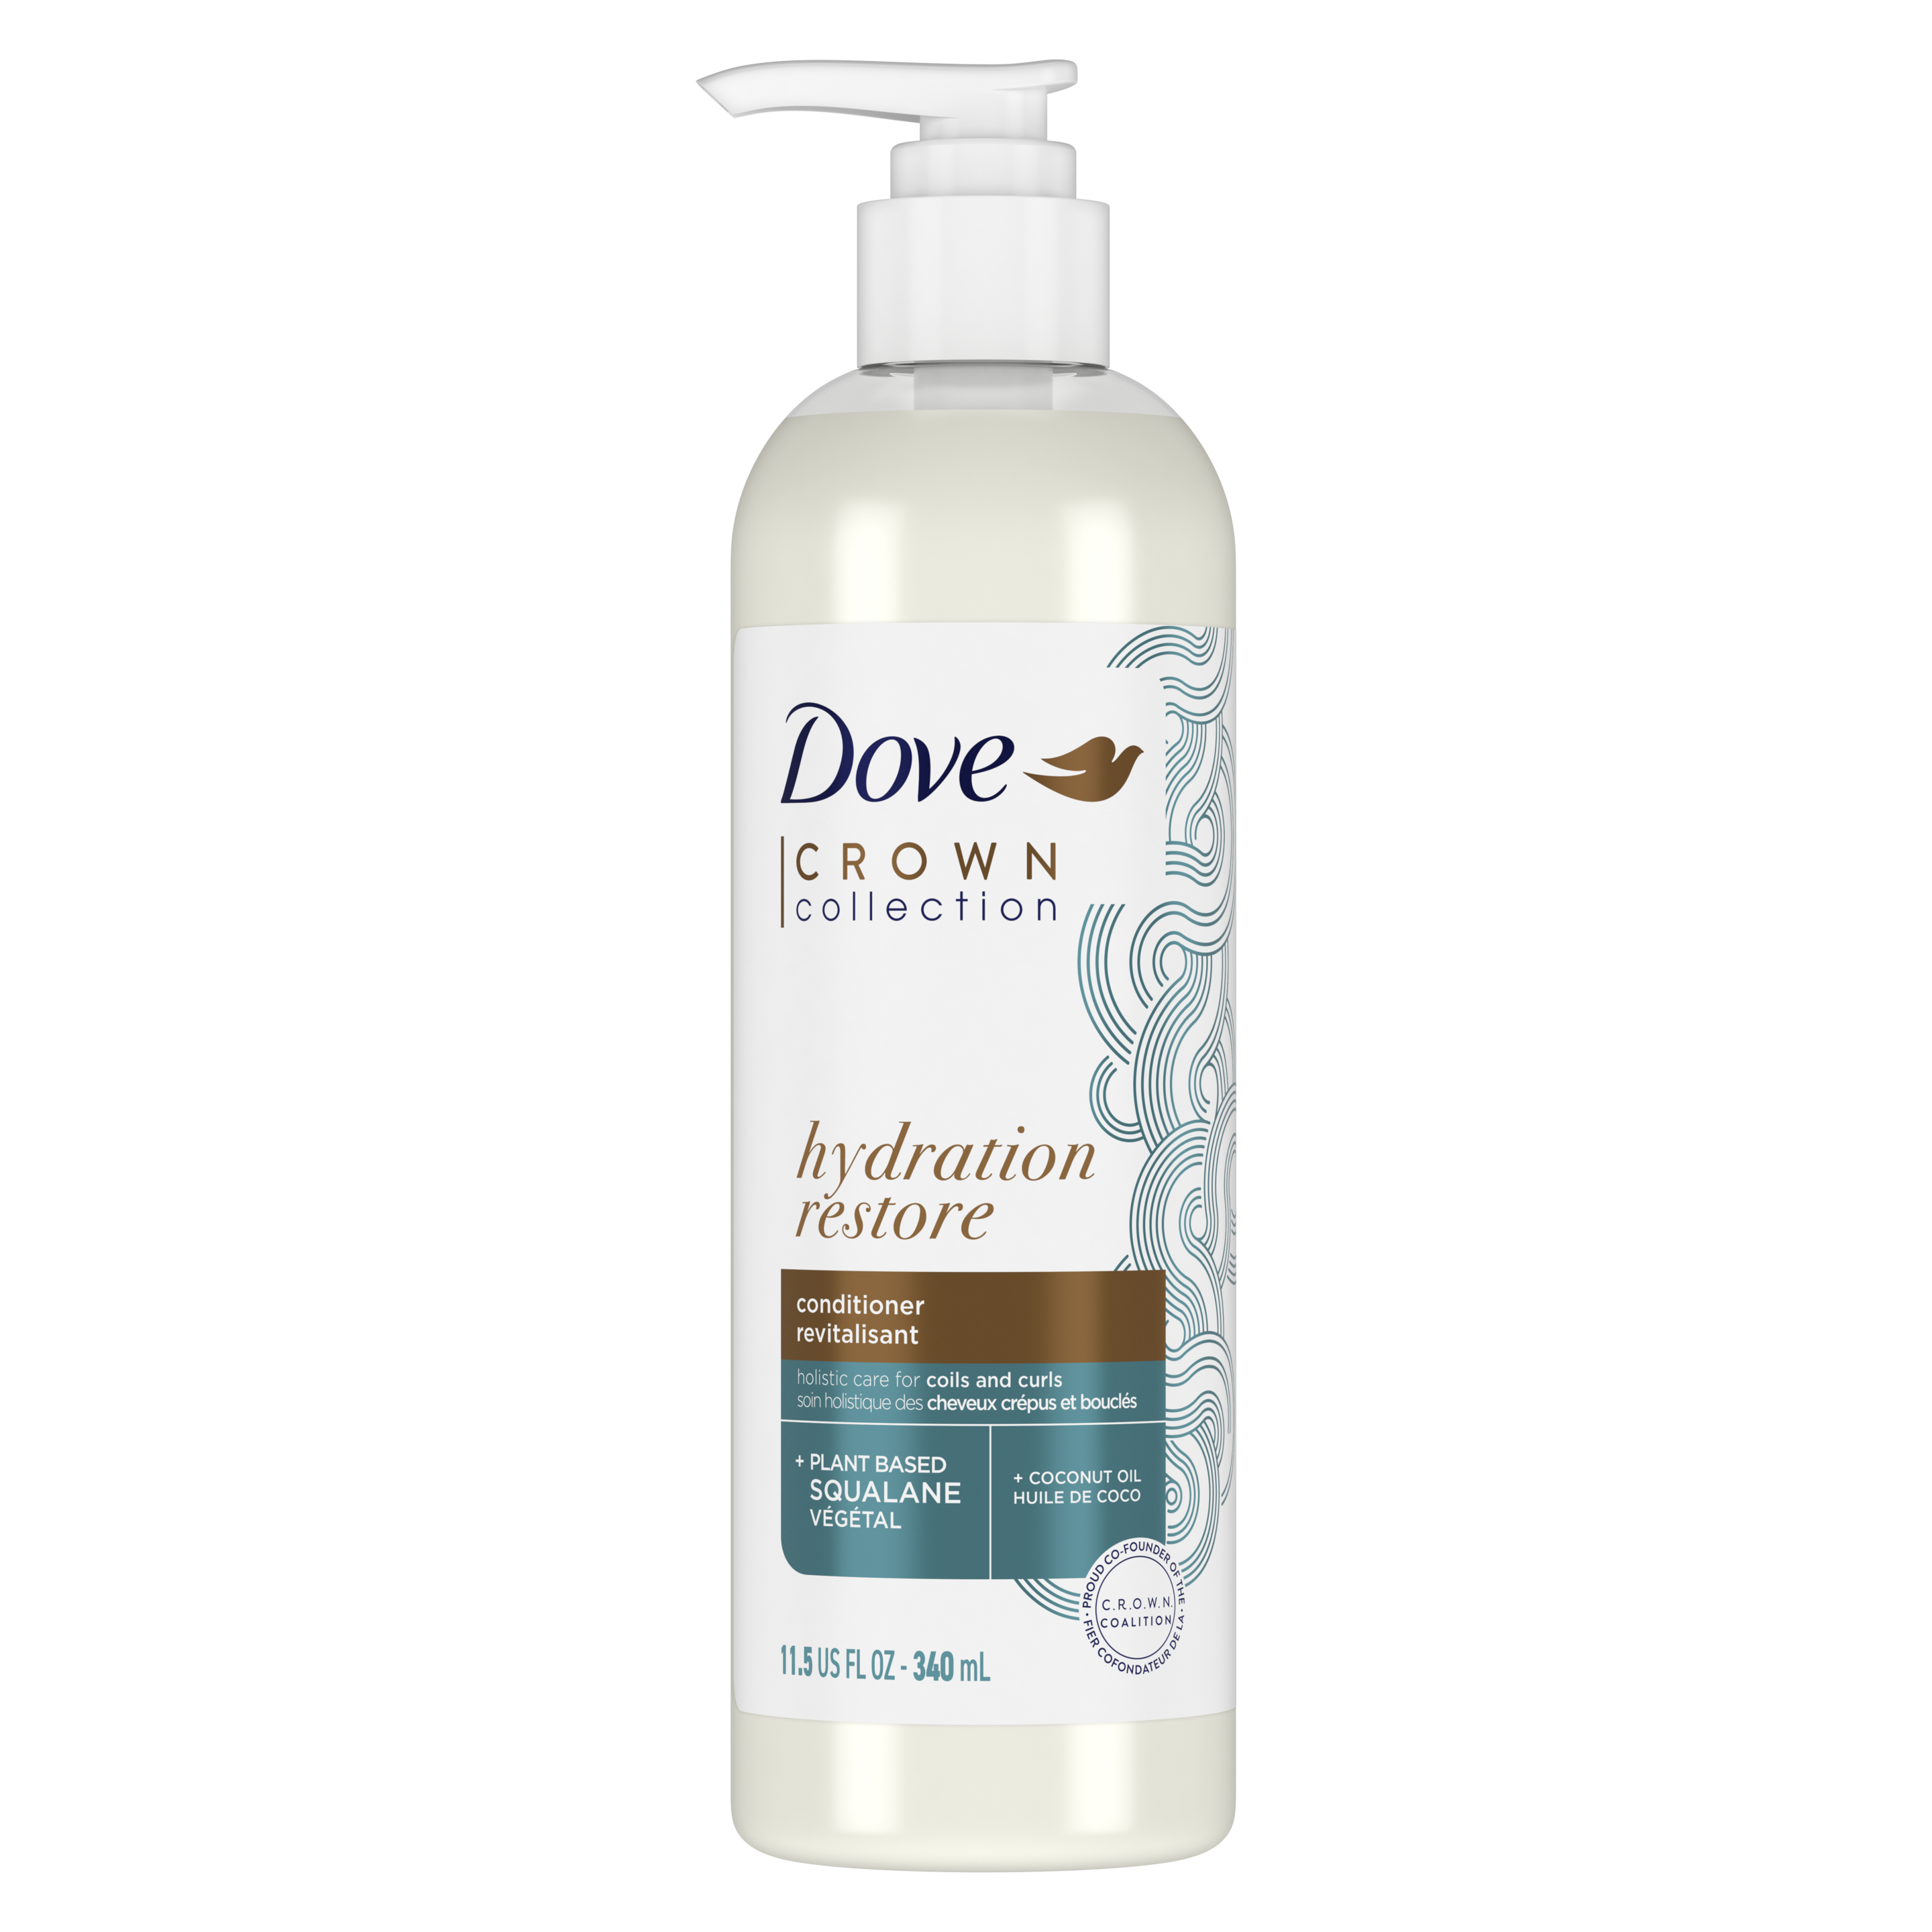 Dove Crown Collection Hydration Restore Conditioner